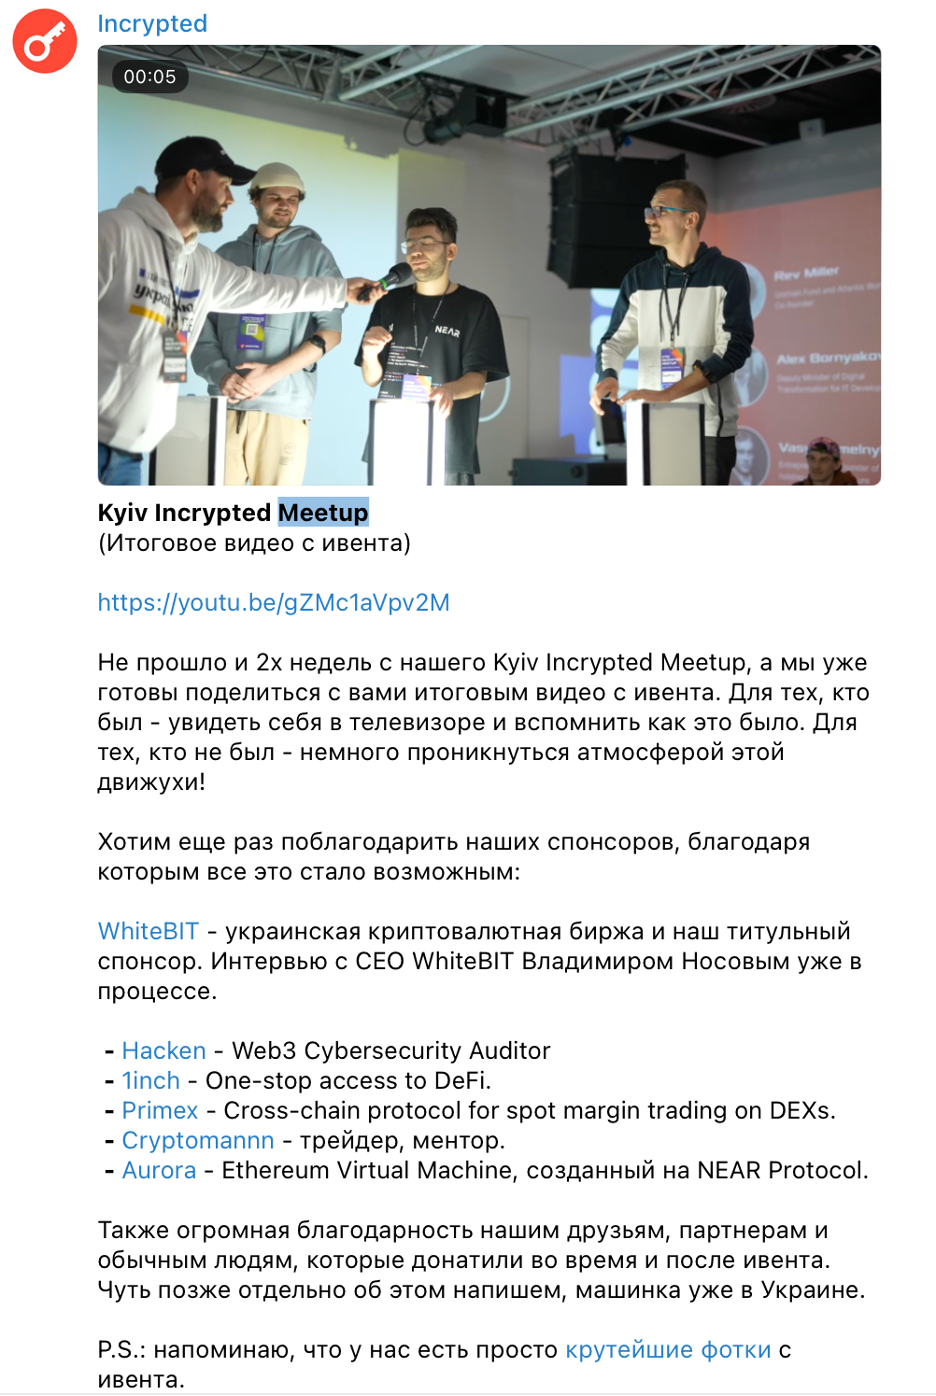 Kyiv Incrypted Meetup 